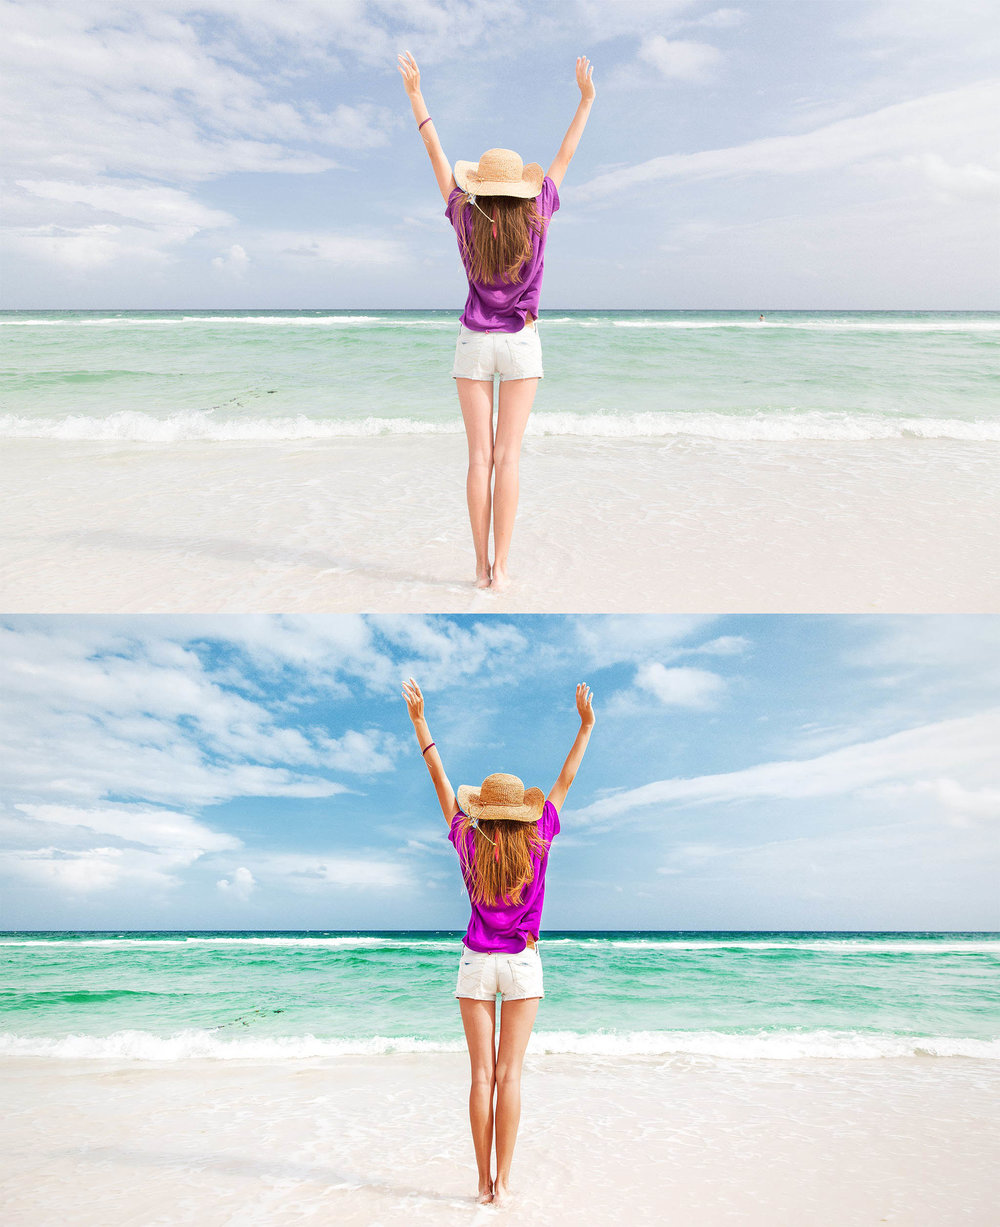 editing-beach-photos-in-photoshop-photo-editing-example